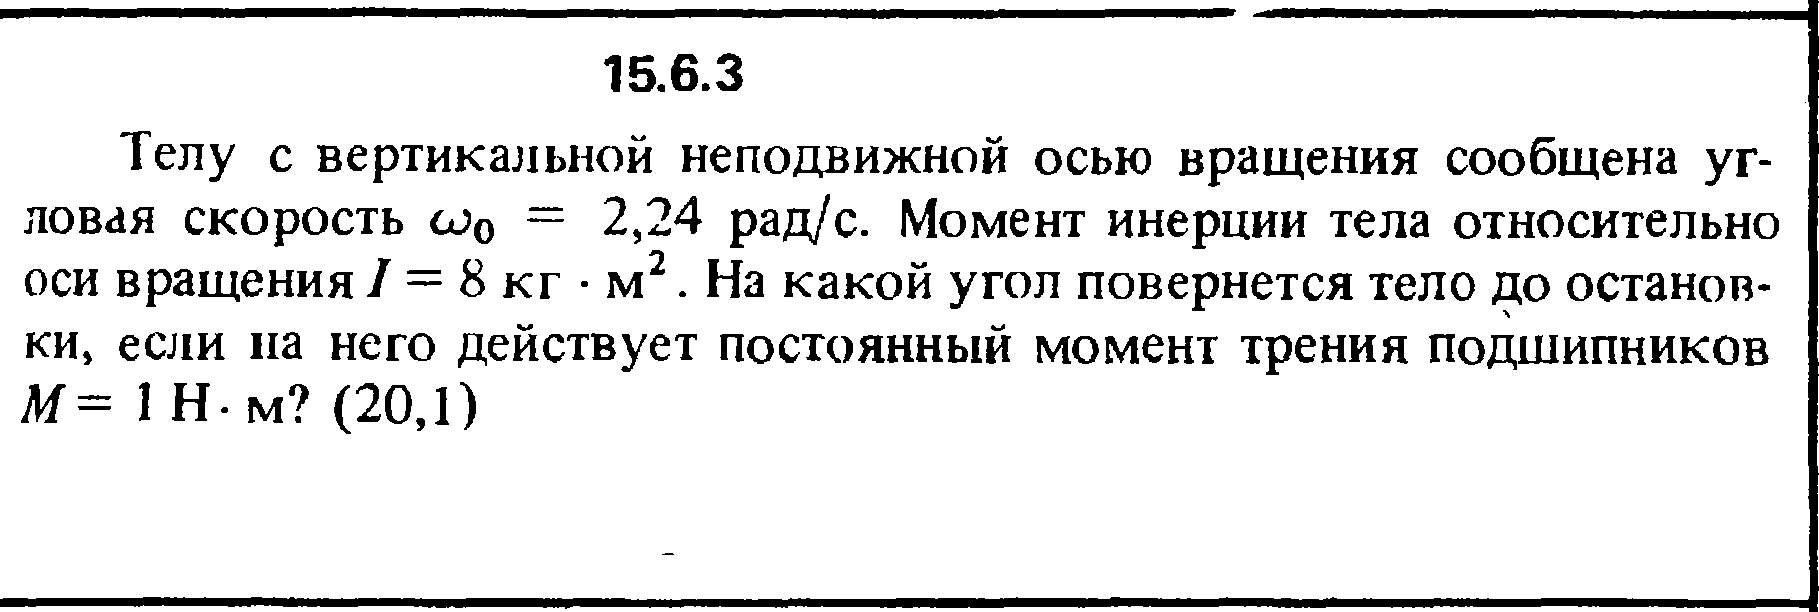 Решение задачи 15.6.3 из сборника Кепе О.Е. 1989 года